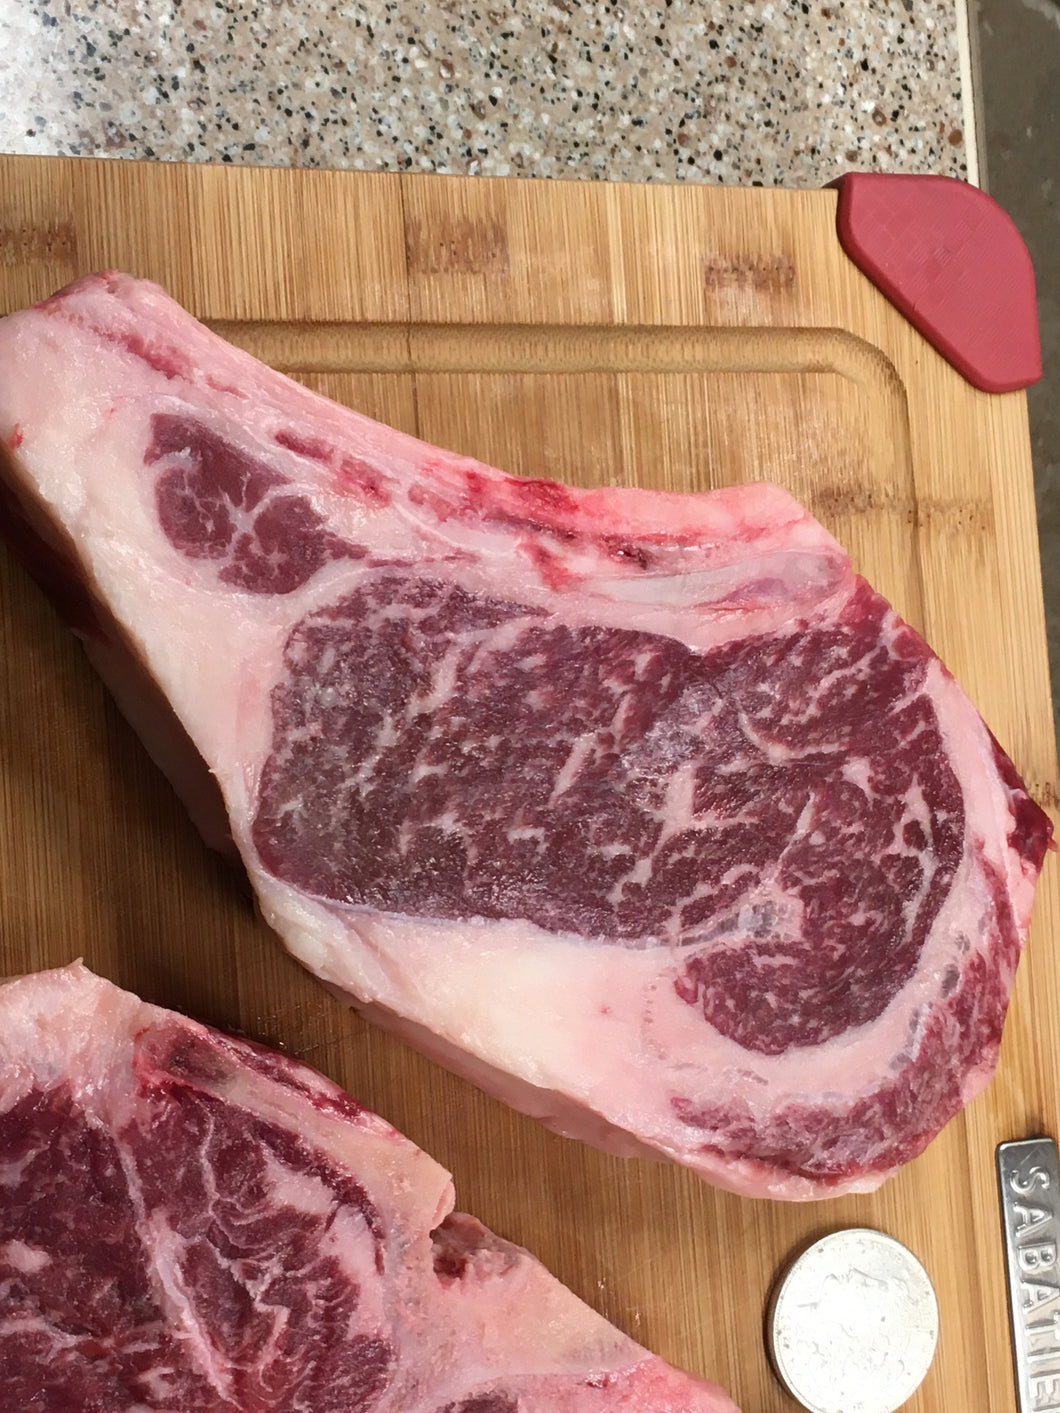 Bone-In Rib Steak